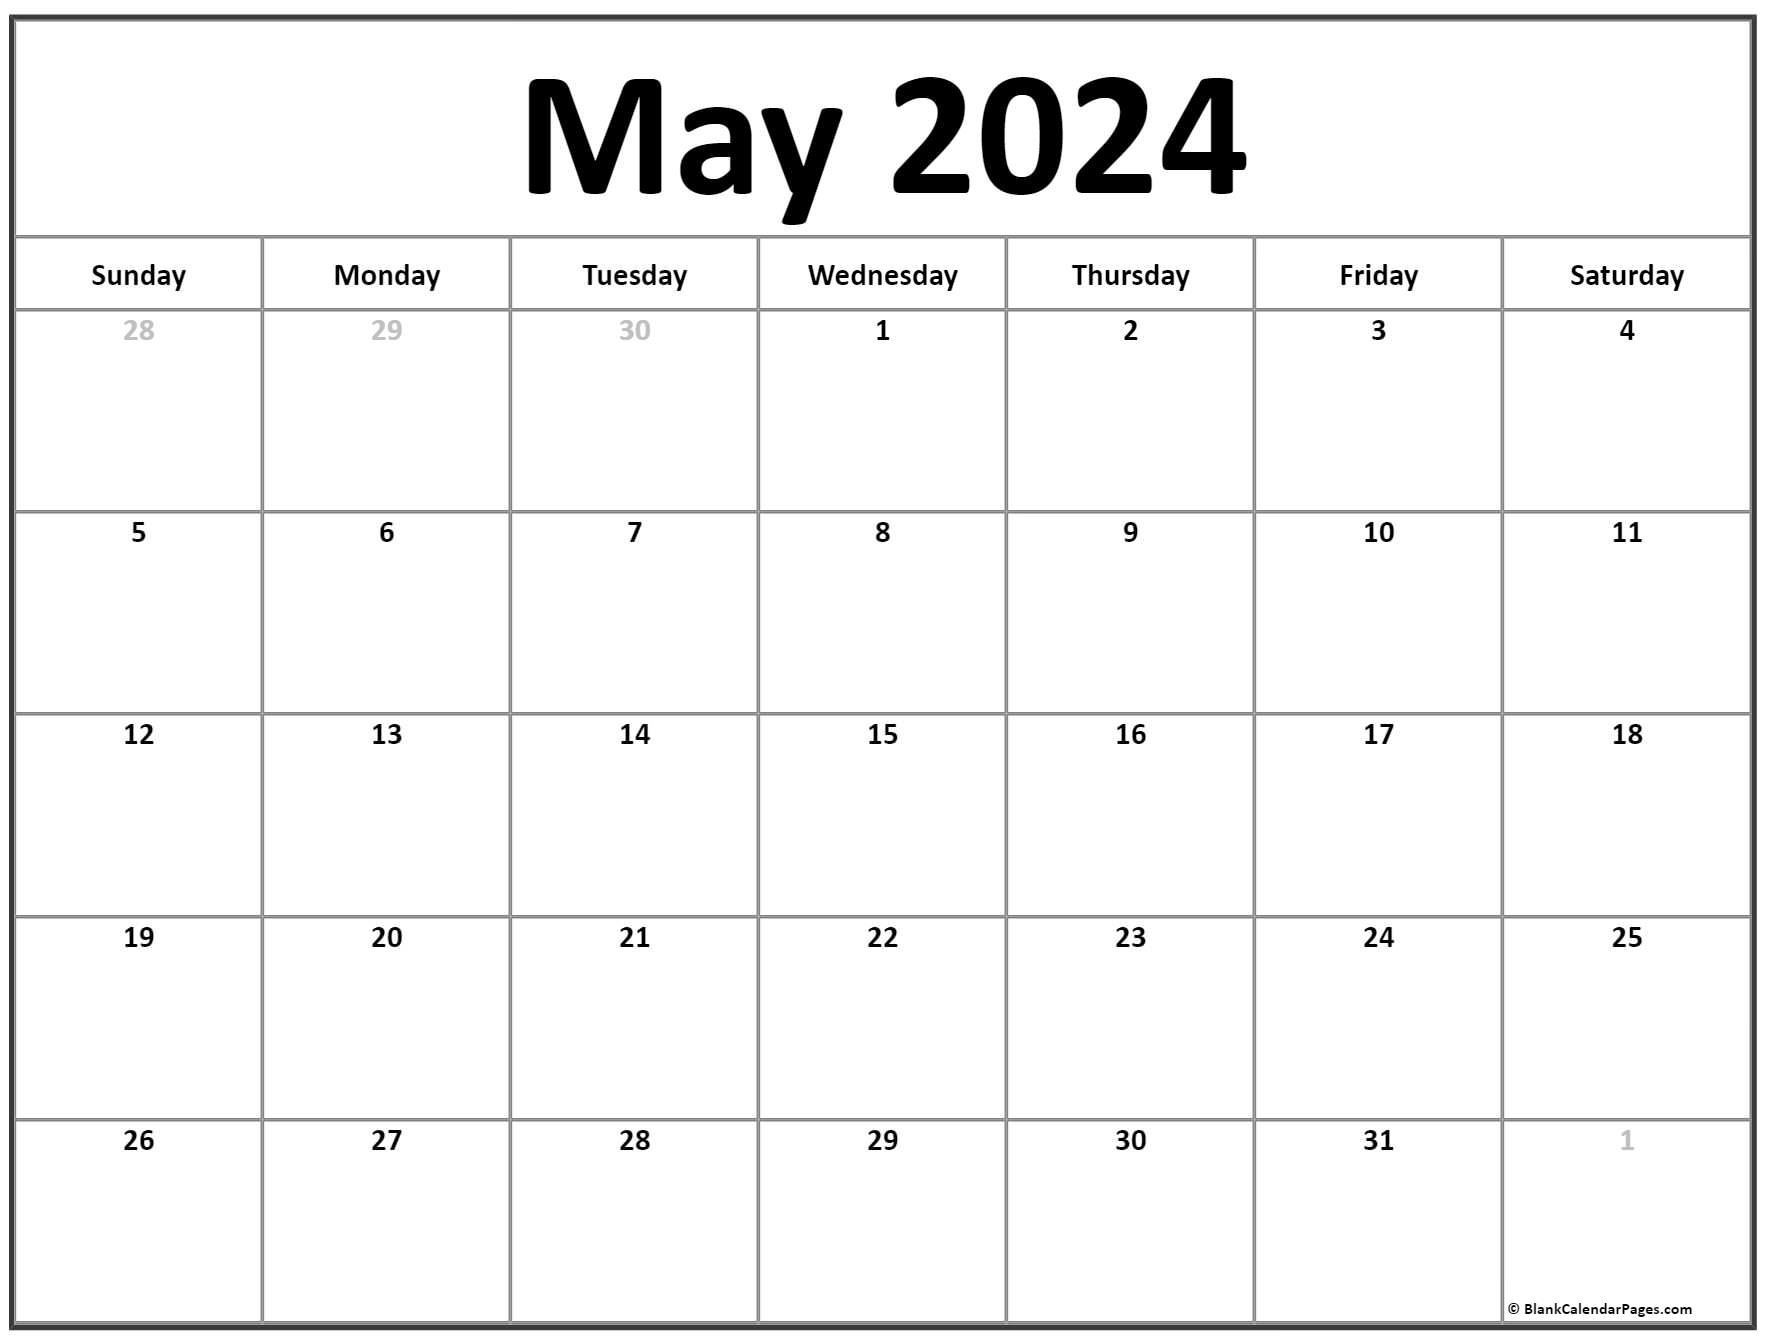 How Long Until May 3rd 2024 Vere Kamilah